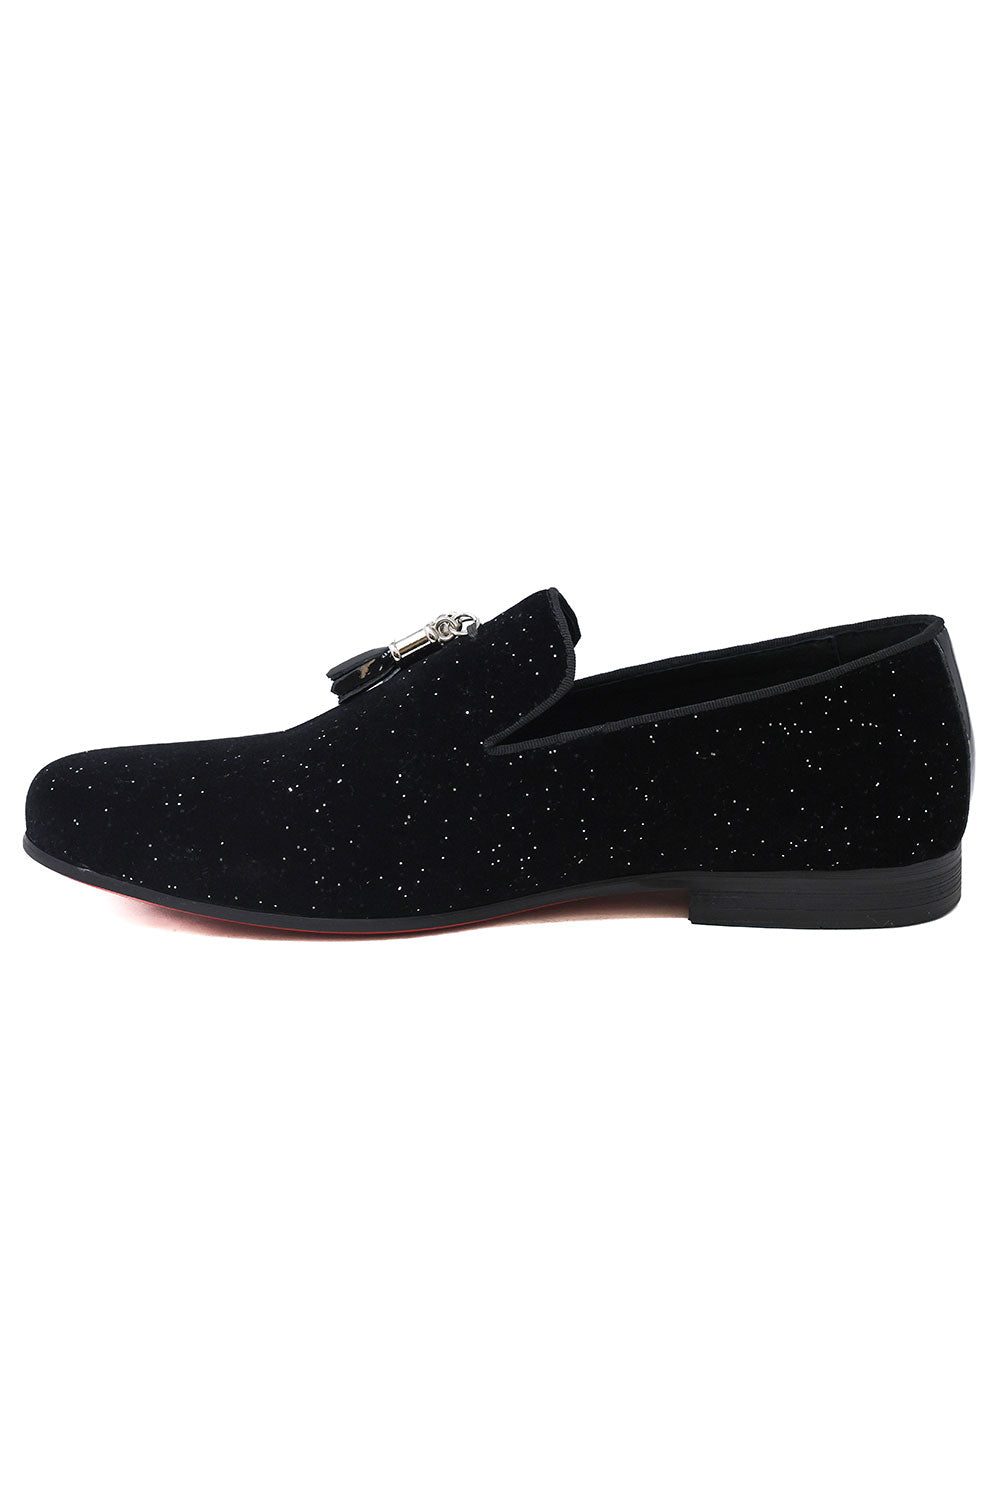 BARABAS Men's Glittery Shiny Luxury Tassel Loafer Shoes 2SH3106 Black Silver